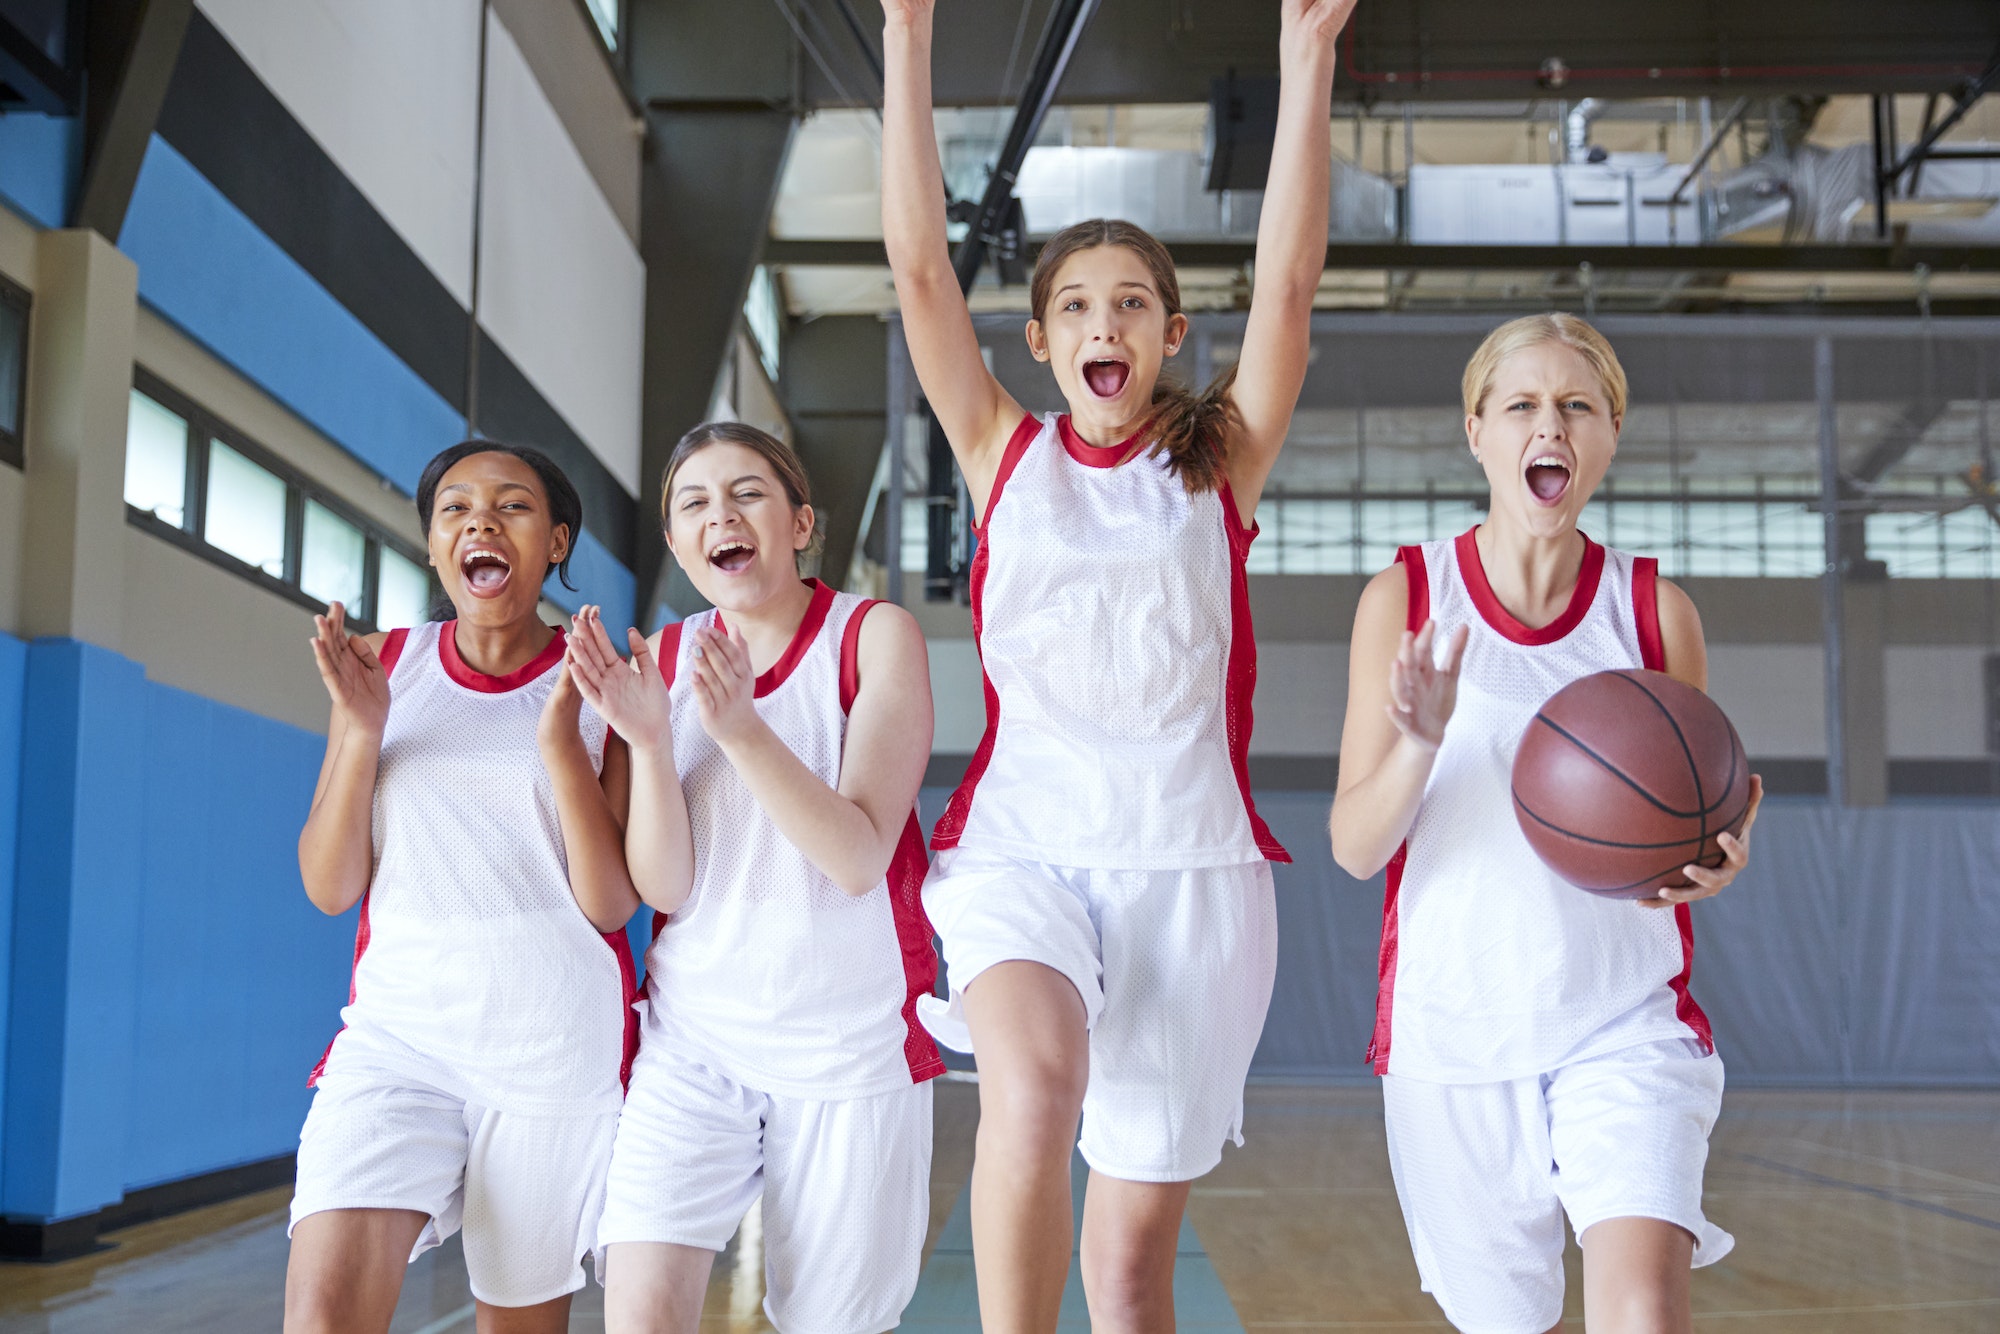 Portrait Of Female High School Basketball Team Celebrating On Court